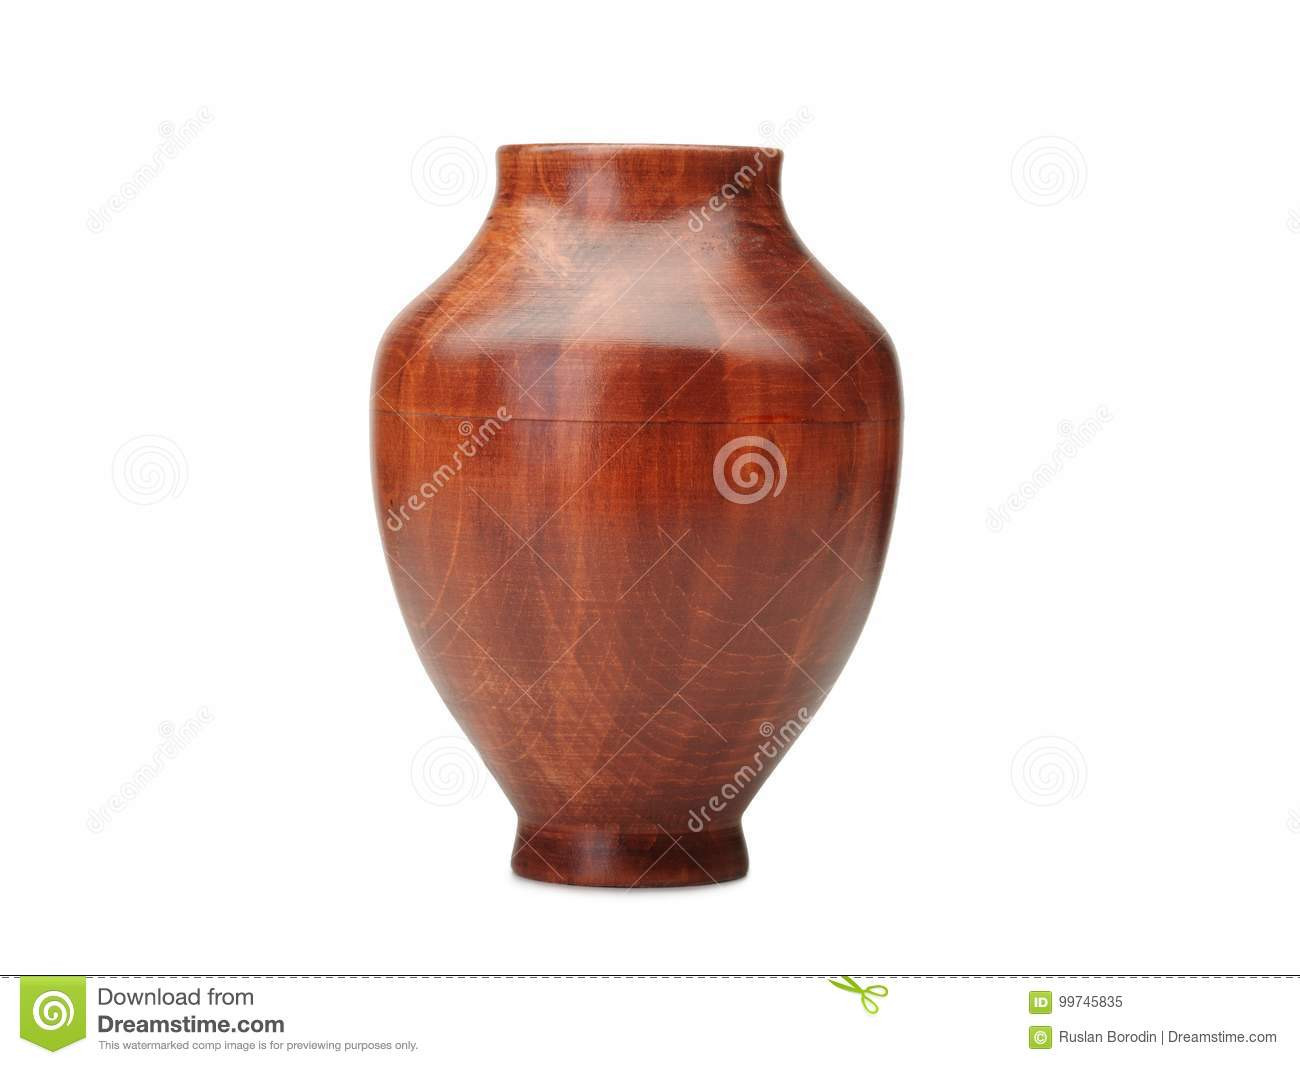 small orange glass vases of flower vase made of wood isolated on white background stock image throughout download flower vase made of wood isolated on white background stock image image of glass